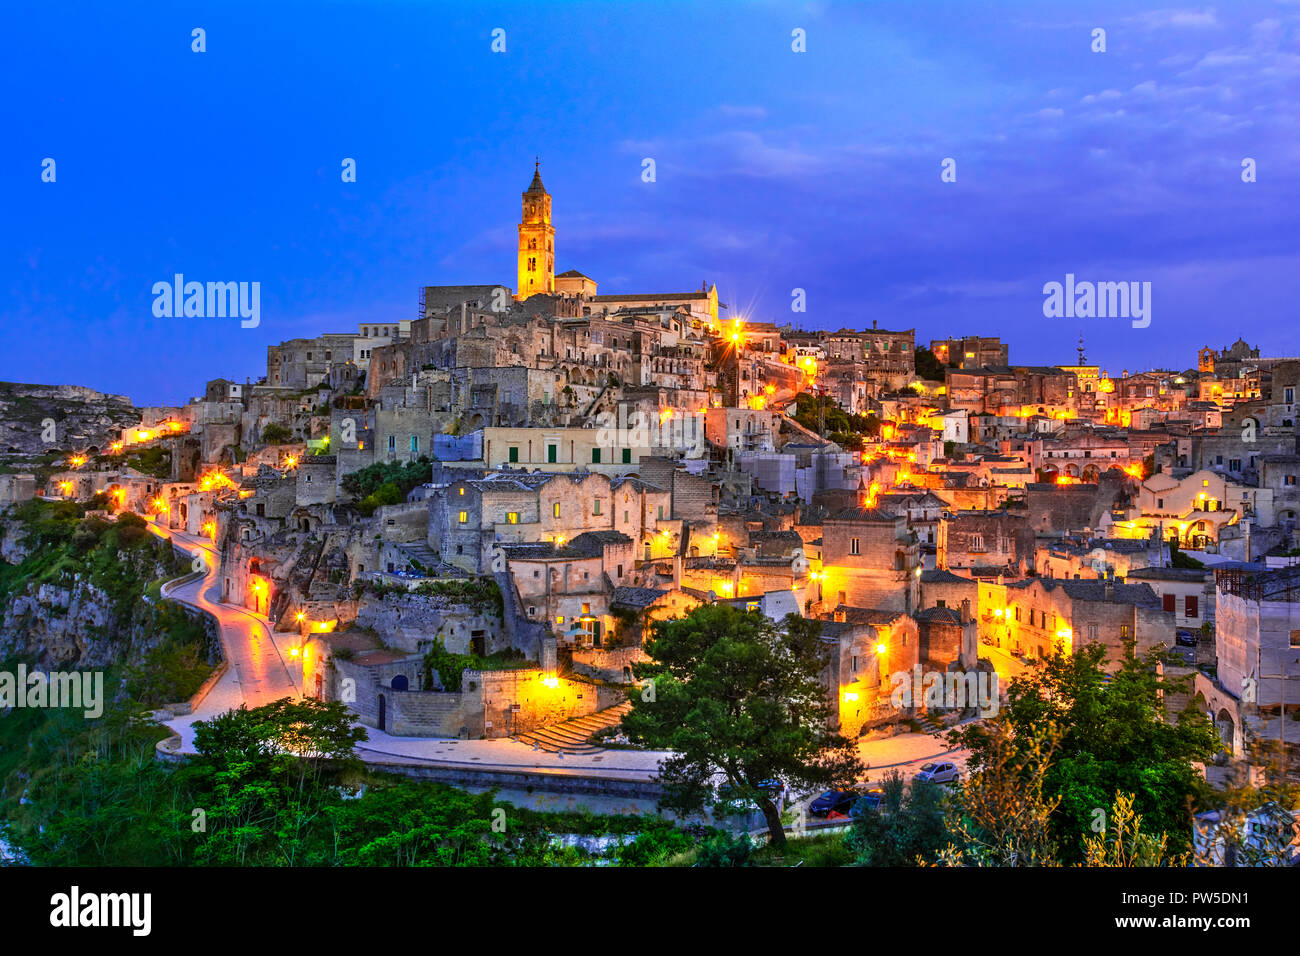 Matera, Basilicata, Italy: Landscape view of the old town - Sassi di Matera, European Capital of Culture, at dawn Stock Photo